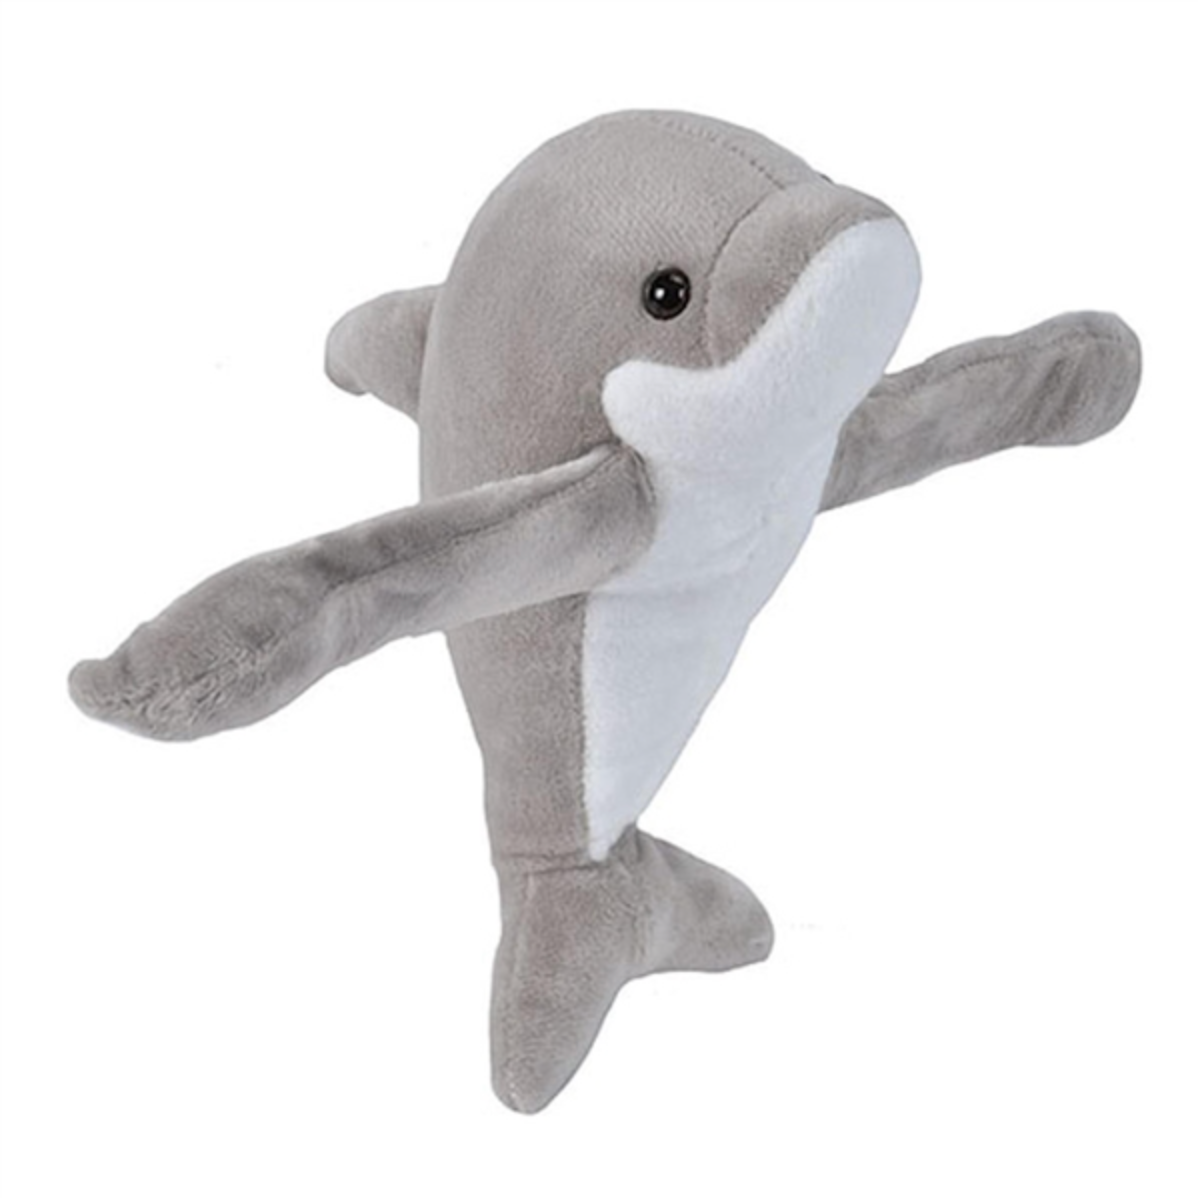 Huggers Dolphin Stuffed Animal - 8"